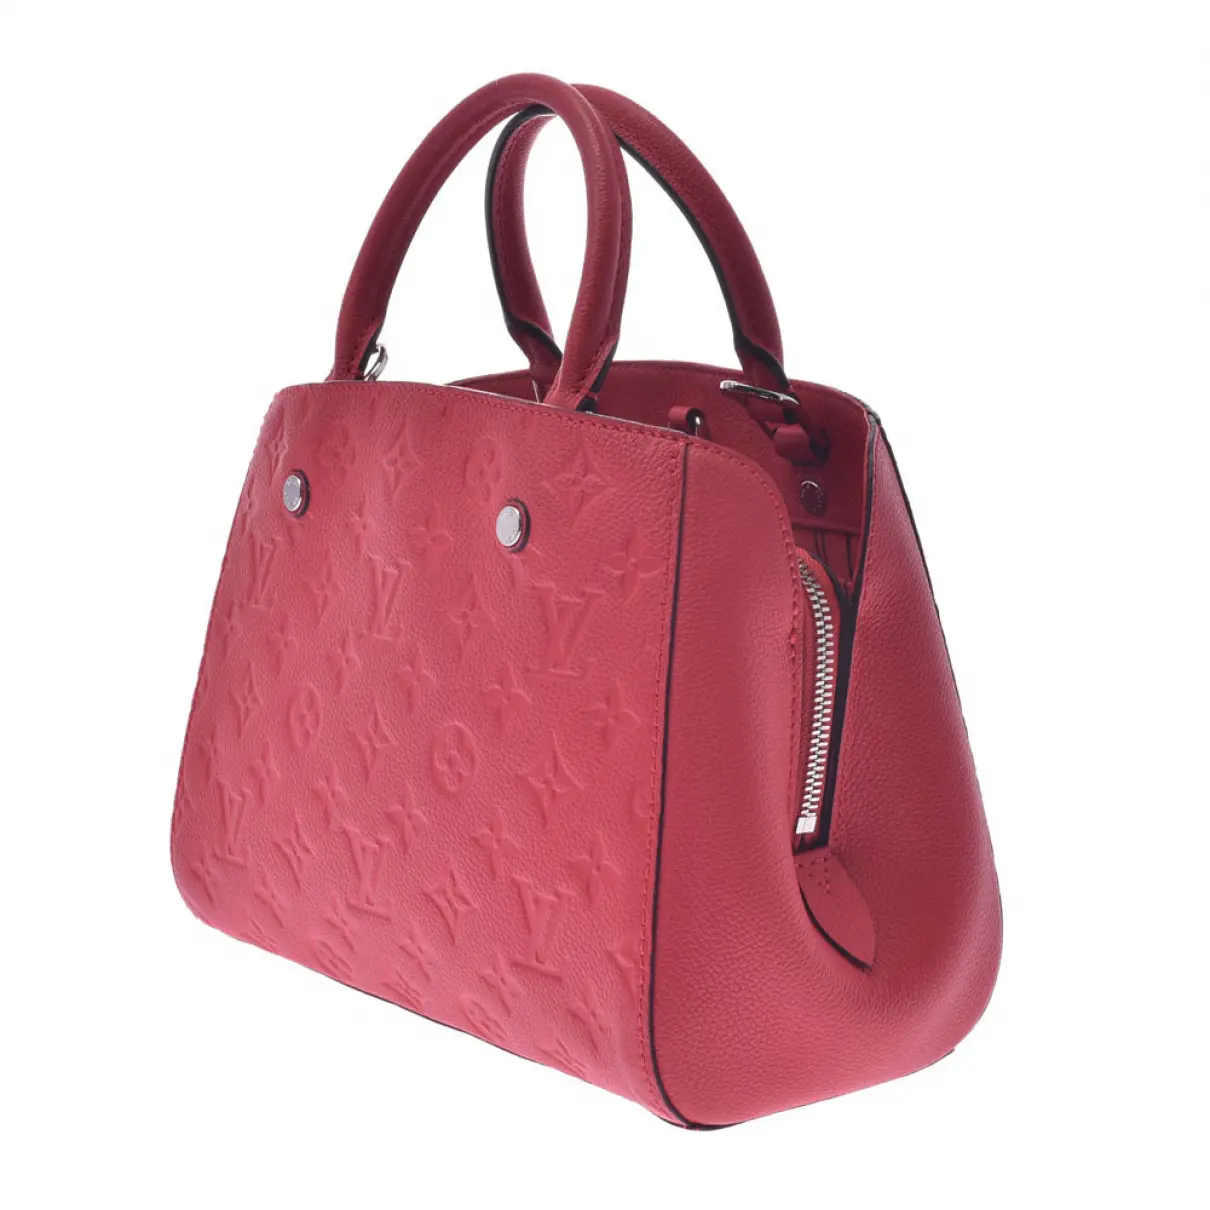 Buy Louis Vuitton Montaigne leather handbag online